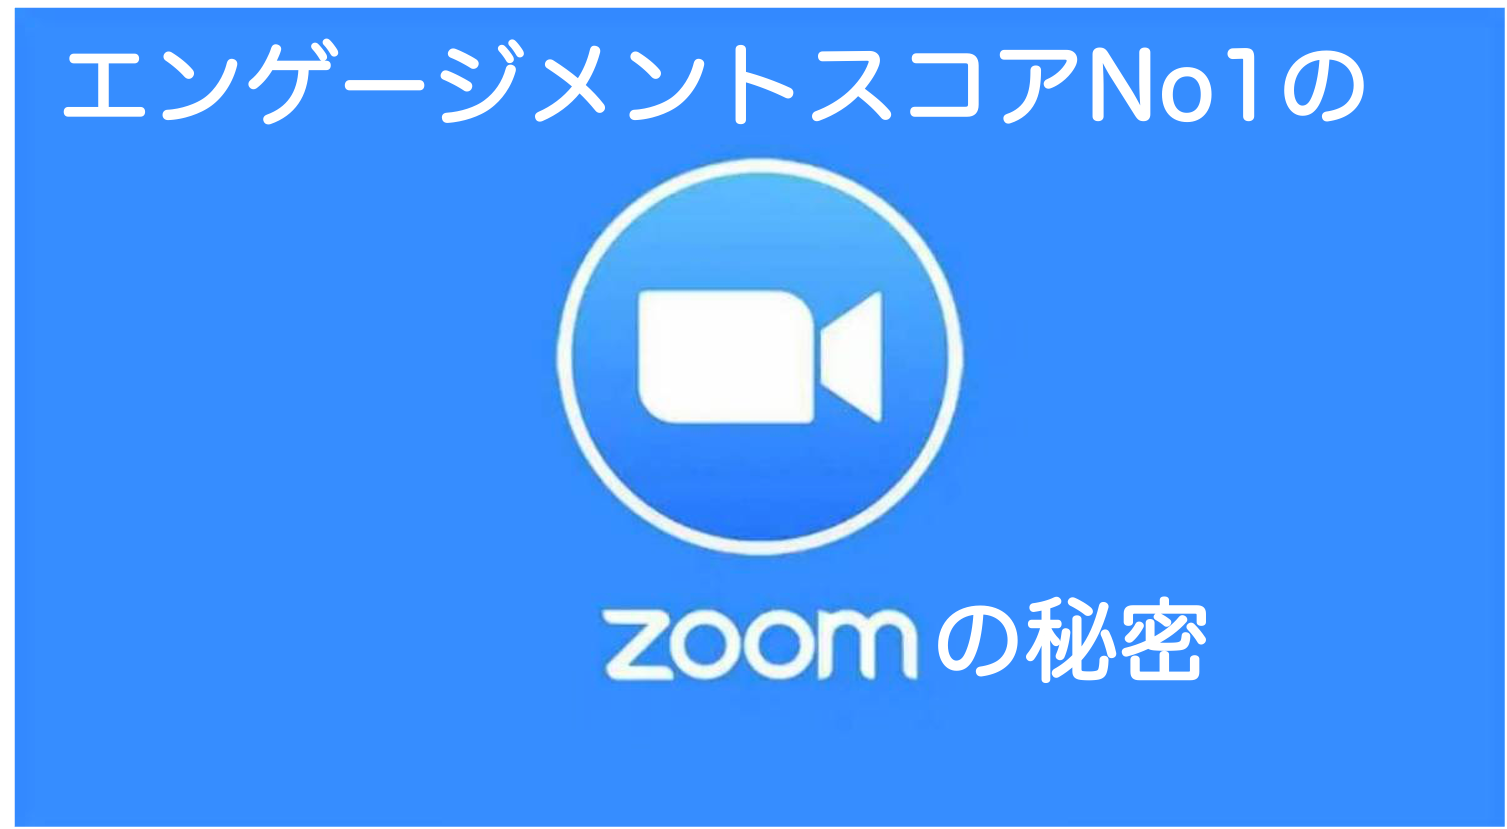 ZOOM(ズーム)